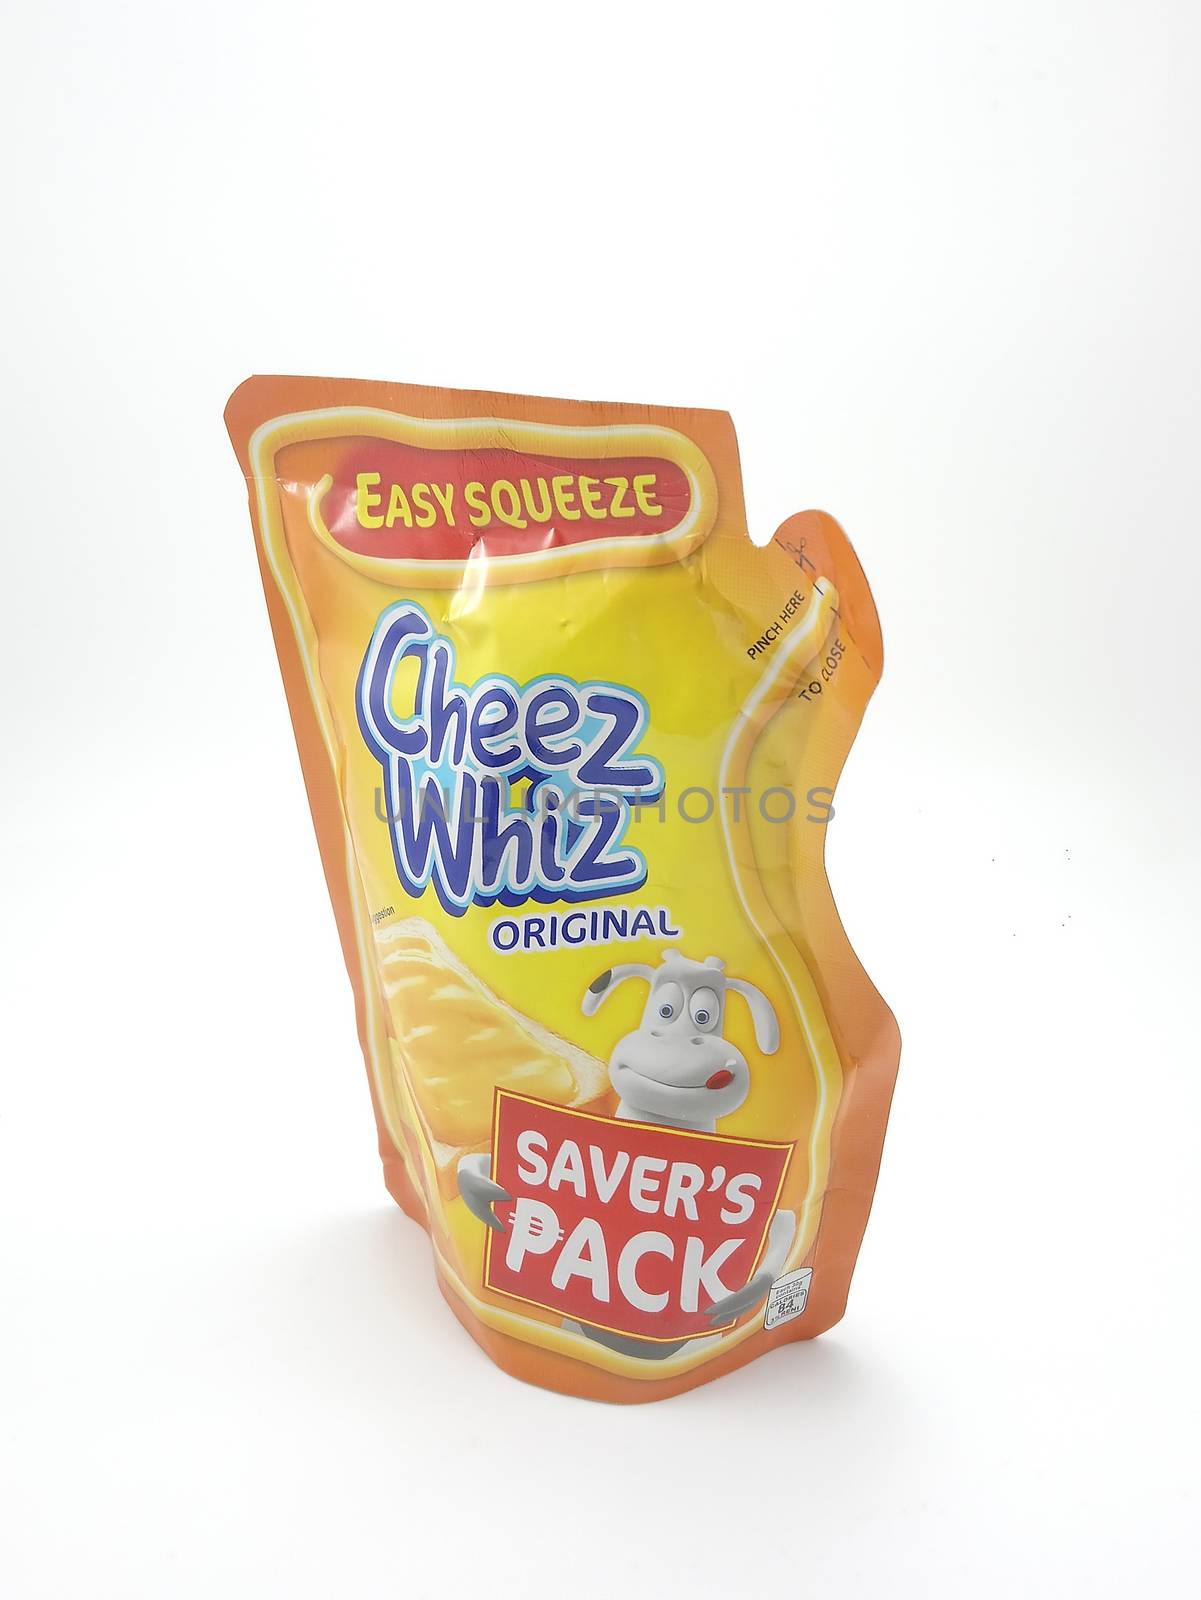 Cheez whiz original cheese spread in Manila, Philippines by imwaltersy